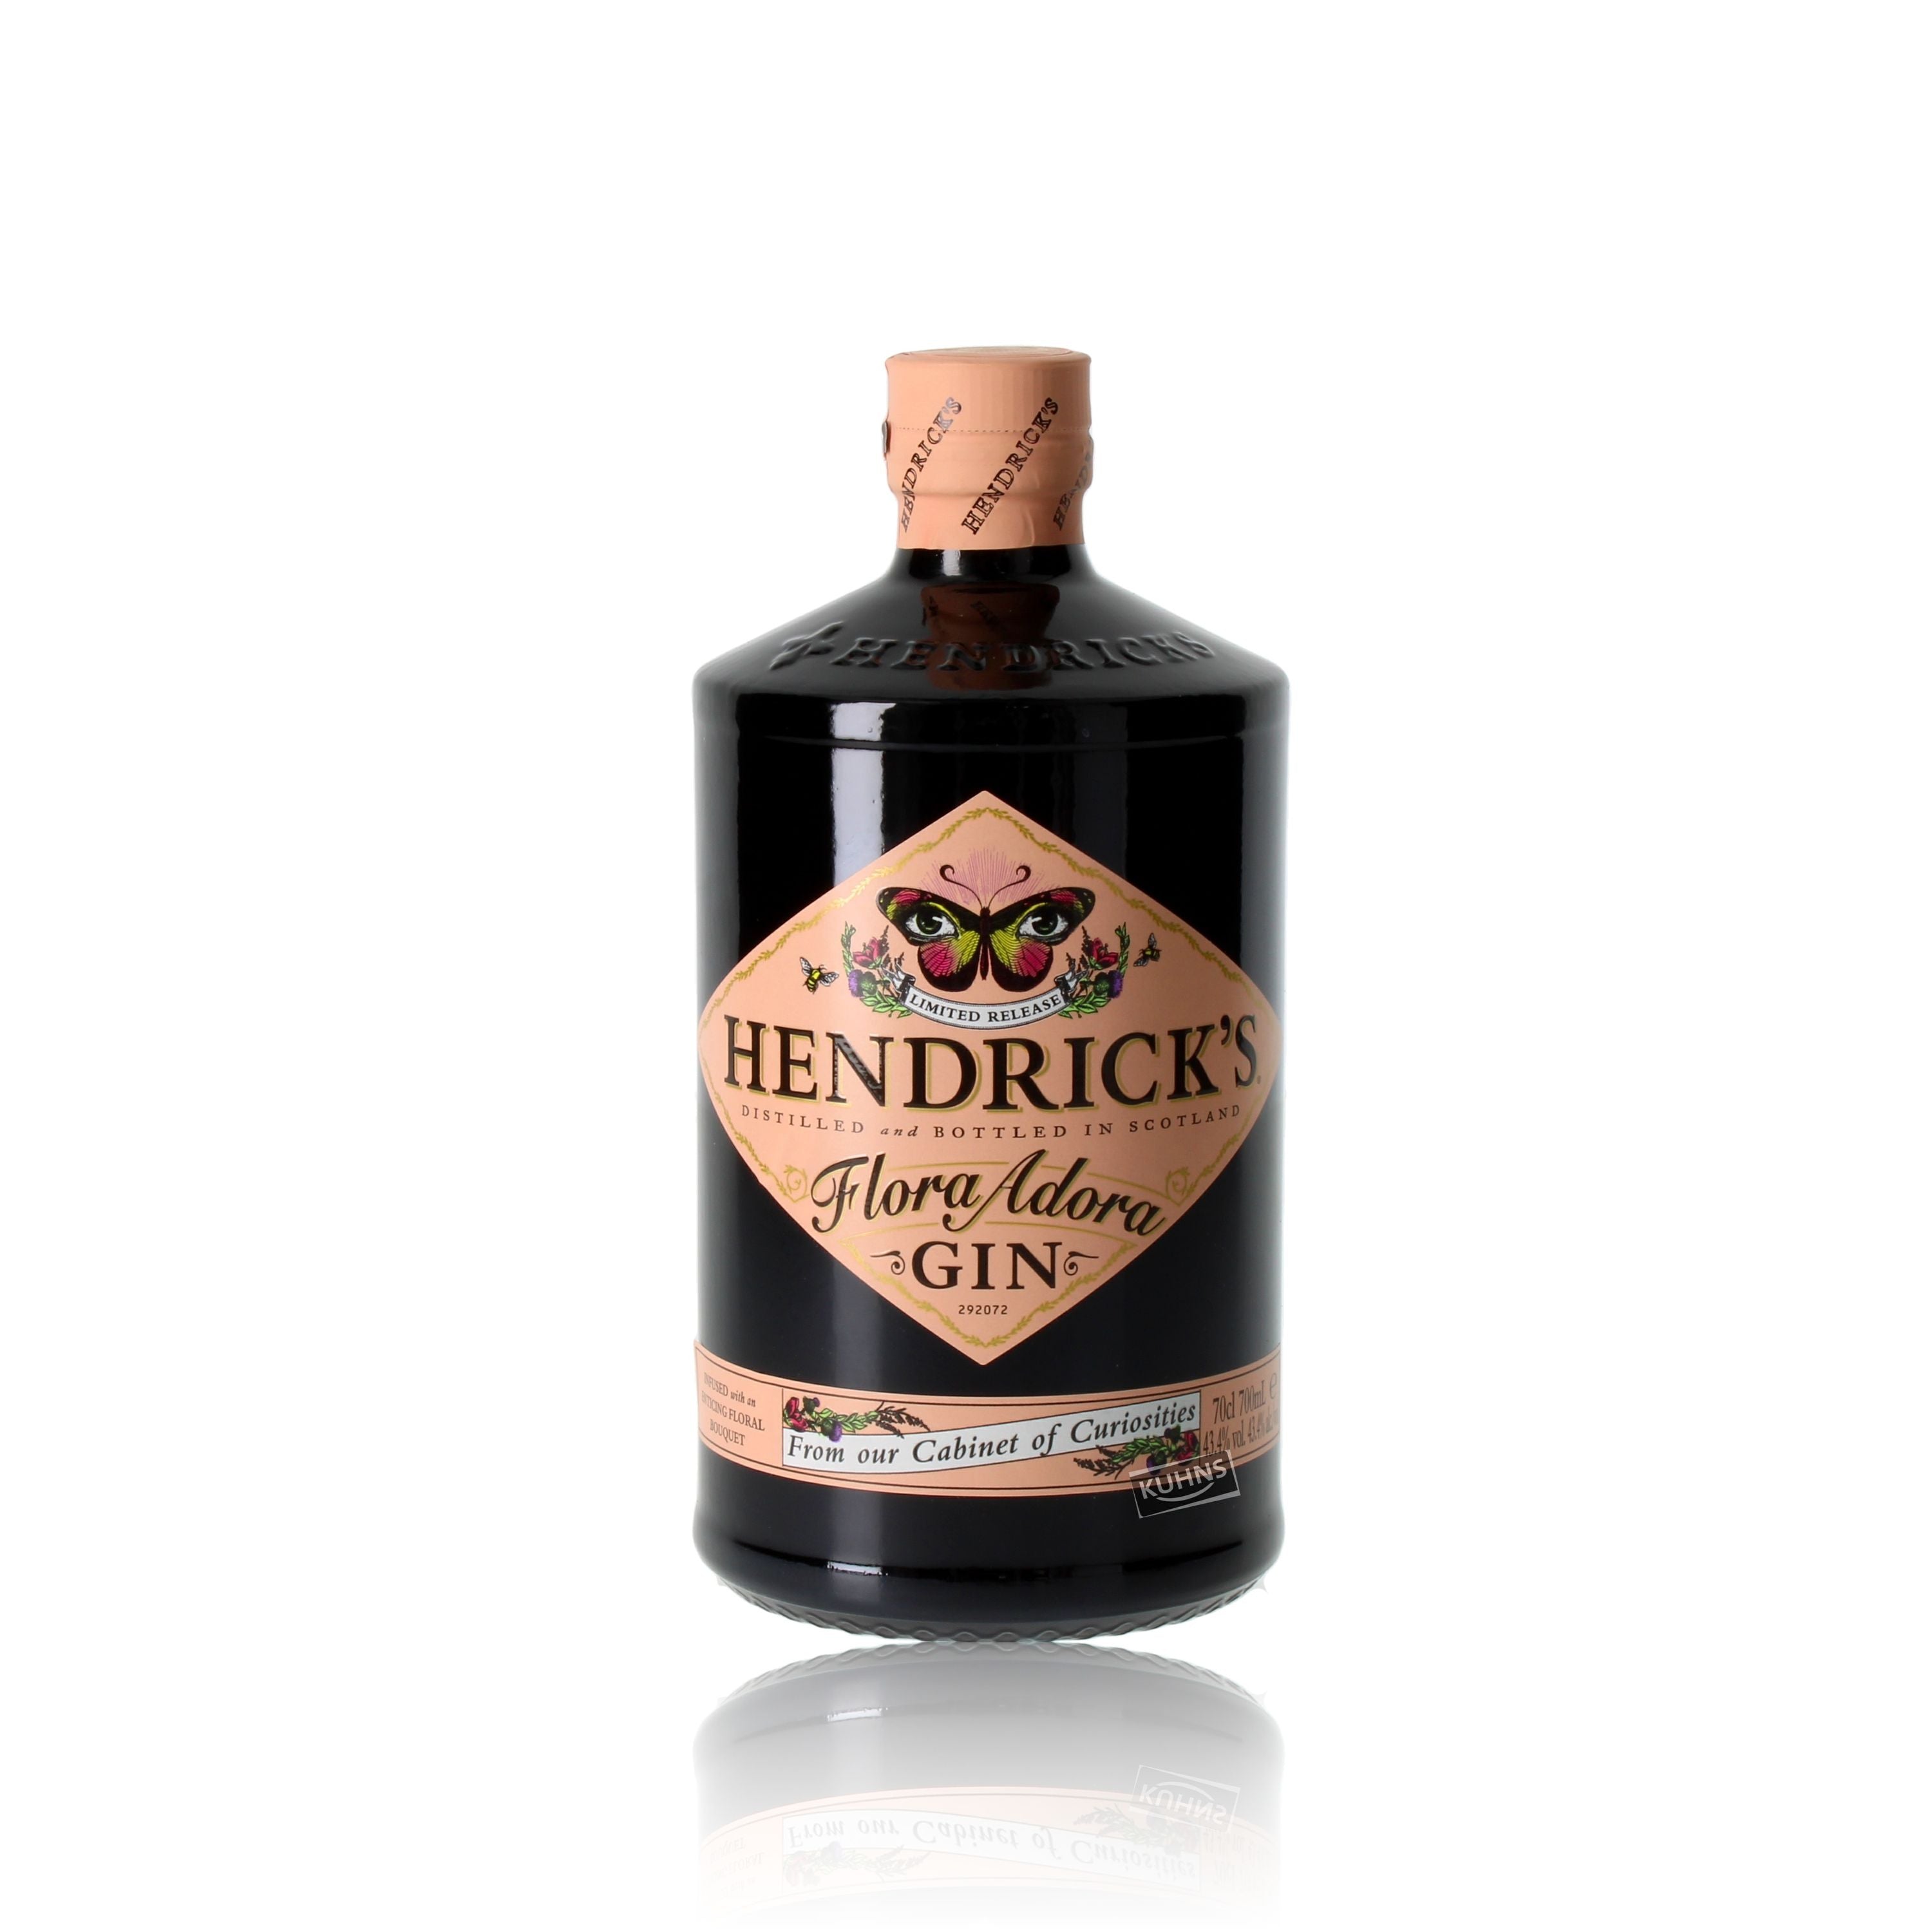 Hendrick's Flora Adora Gin 0.7l, alc. 43.4% vol., Gin Scotland